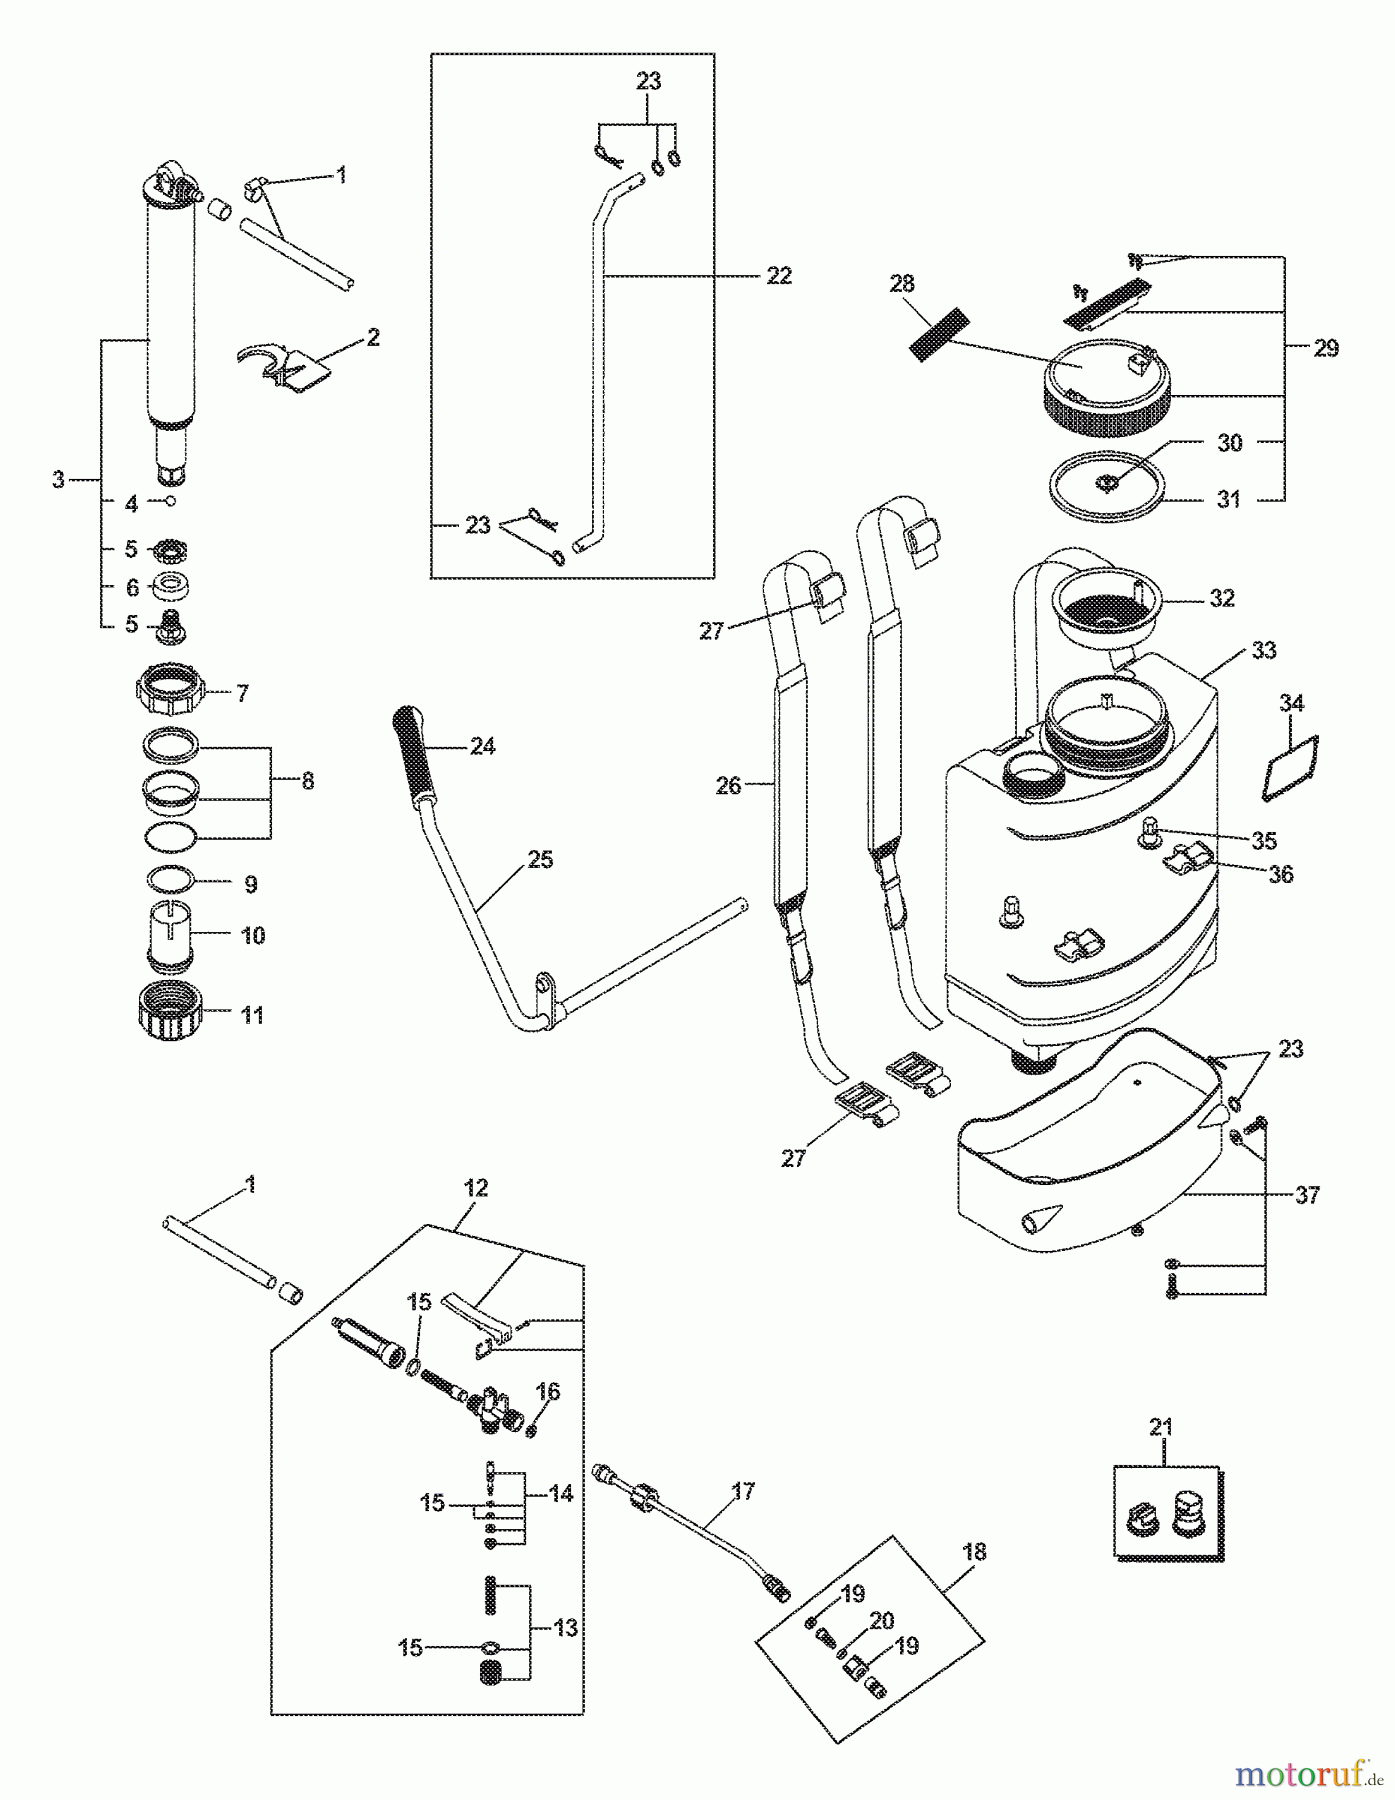  Echo Pflanzenschutzspritzen MS-50 - Echo Manual Sprayer General Assembly